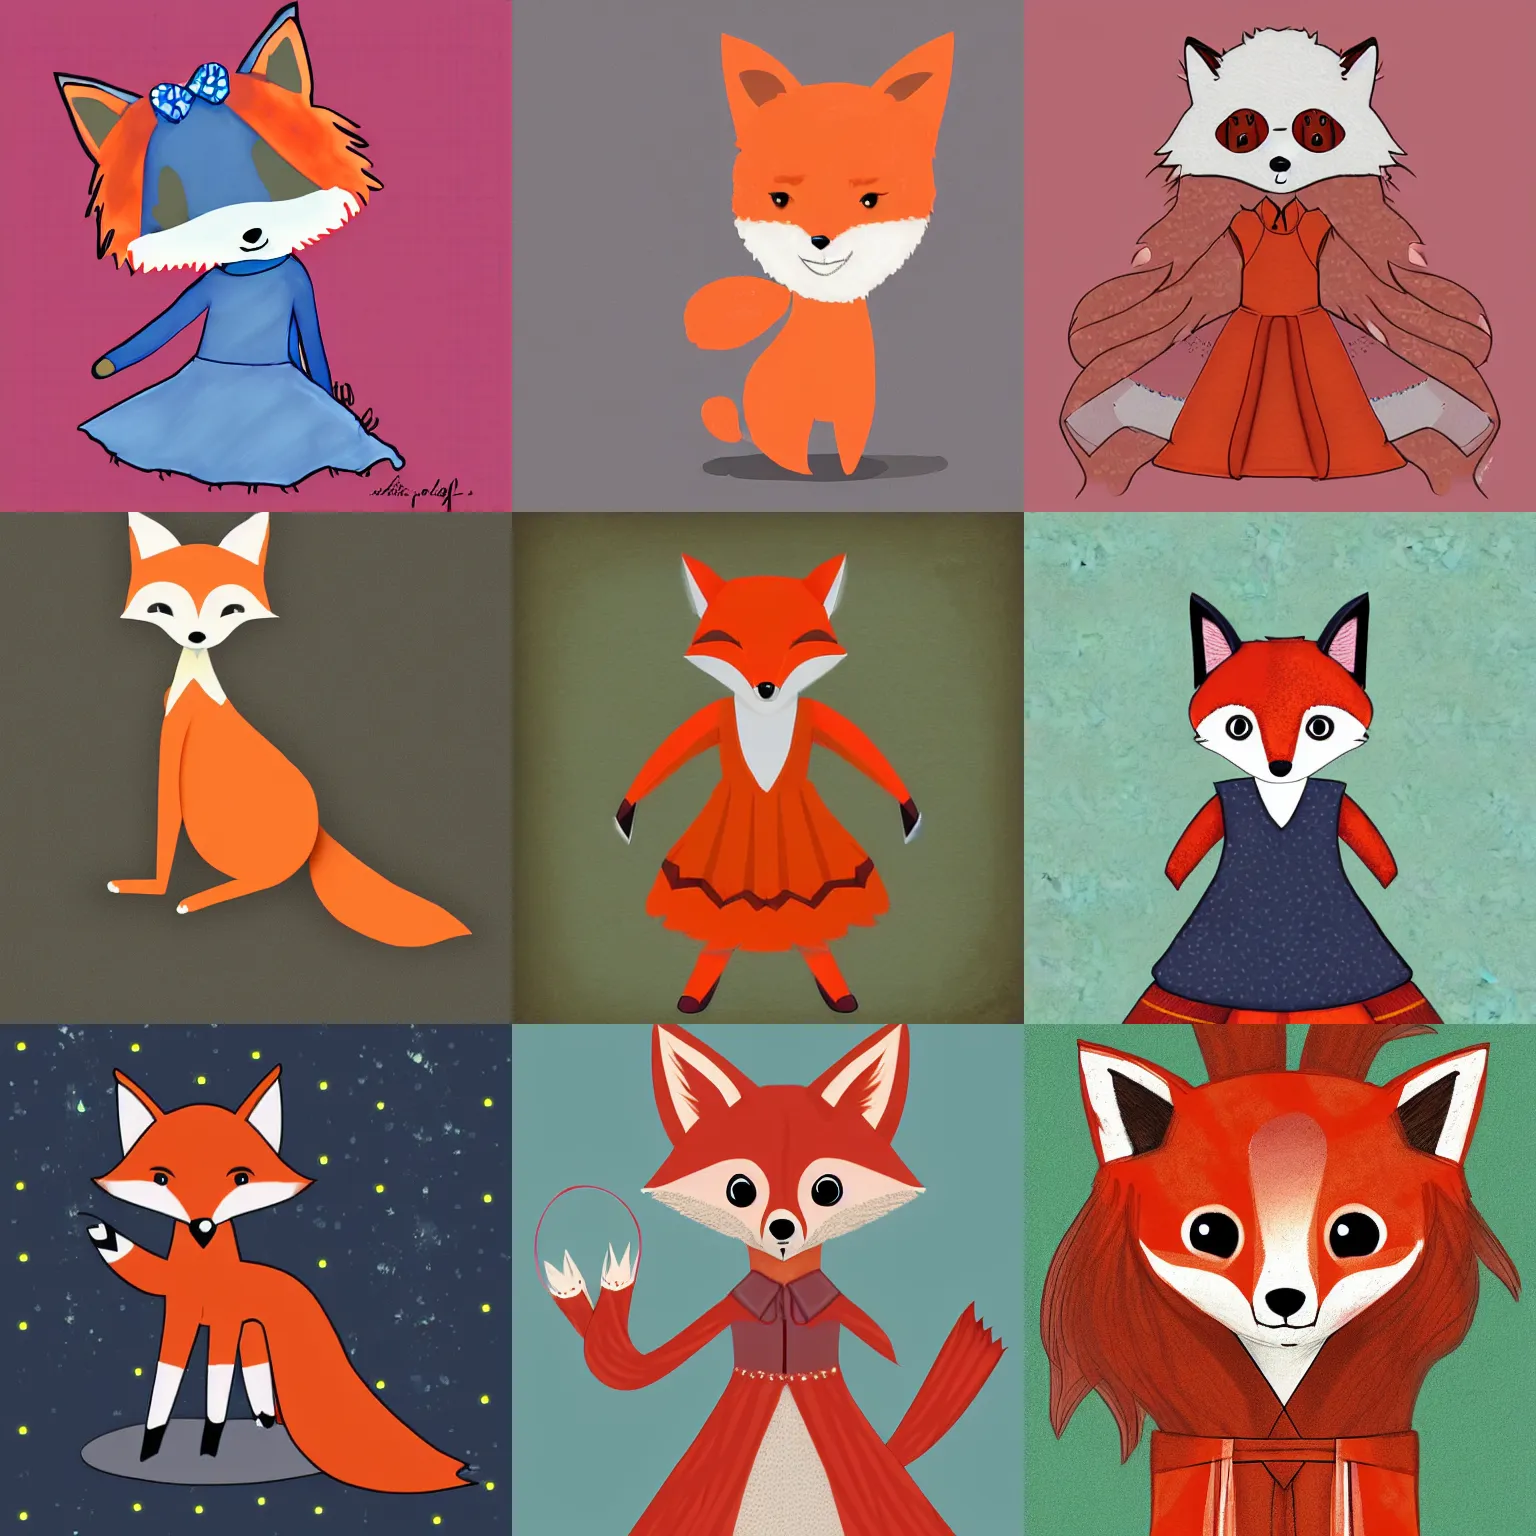 Prompt: digital art of a cute fox wearing a dress